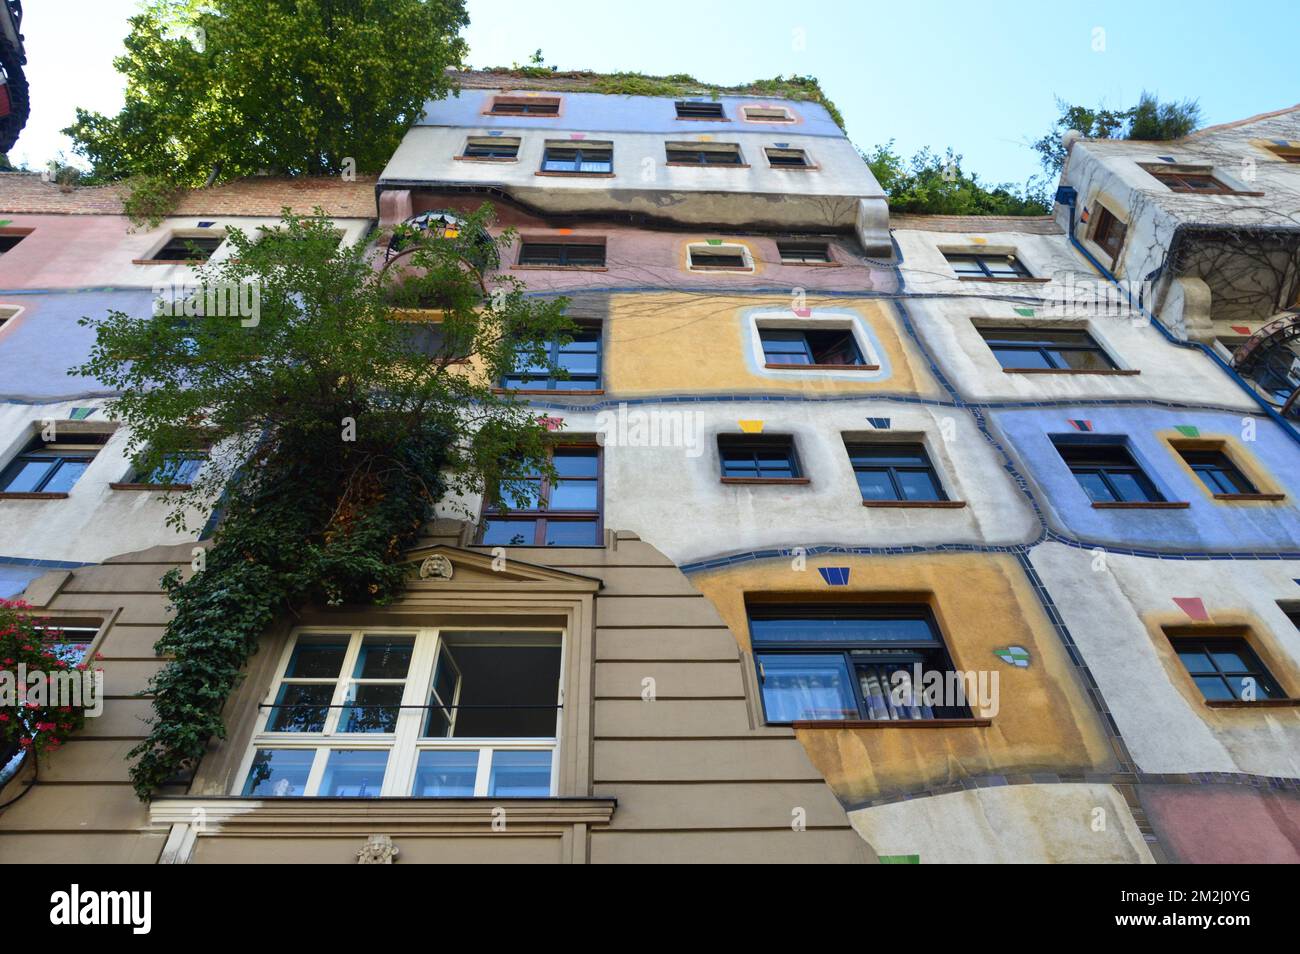 Hundertwasserhaus Vienna | Maison Hundertwasser Vienne 16/08/2018 Stock Photo